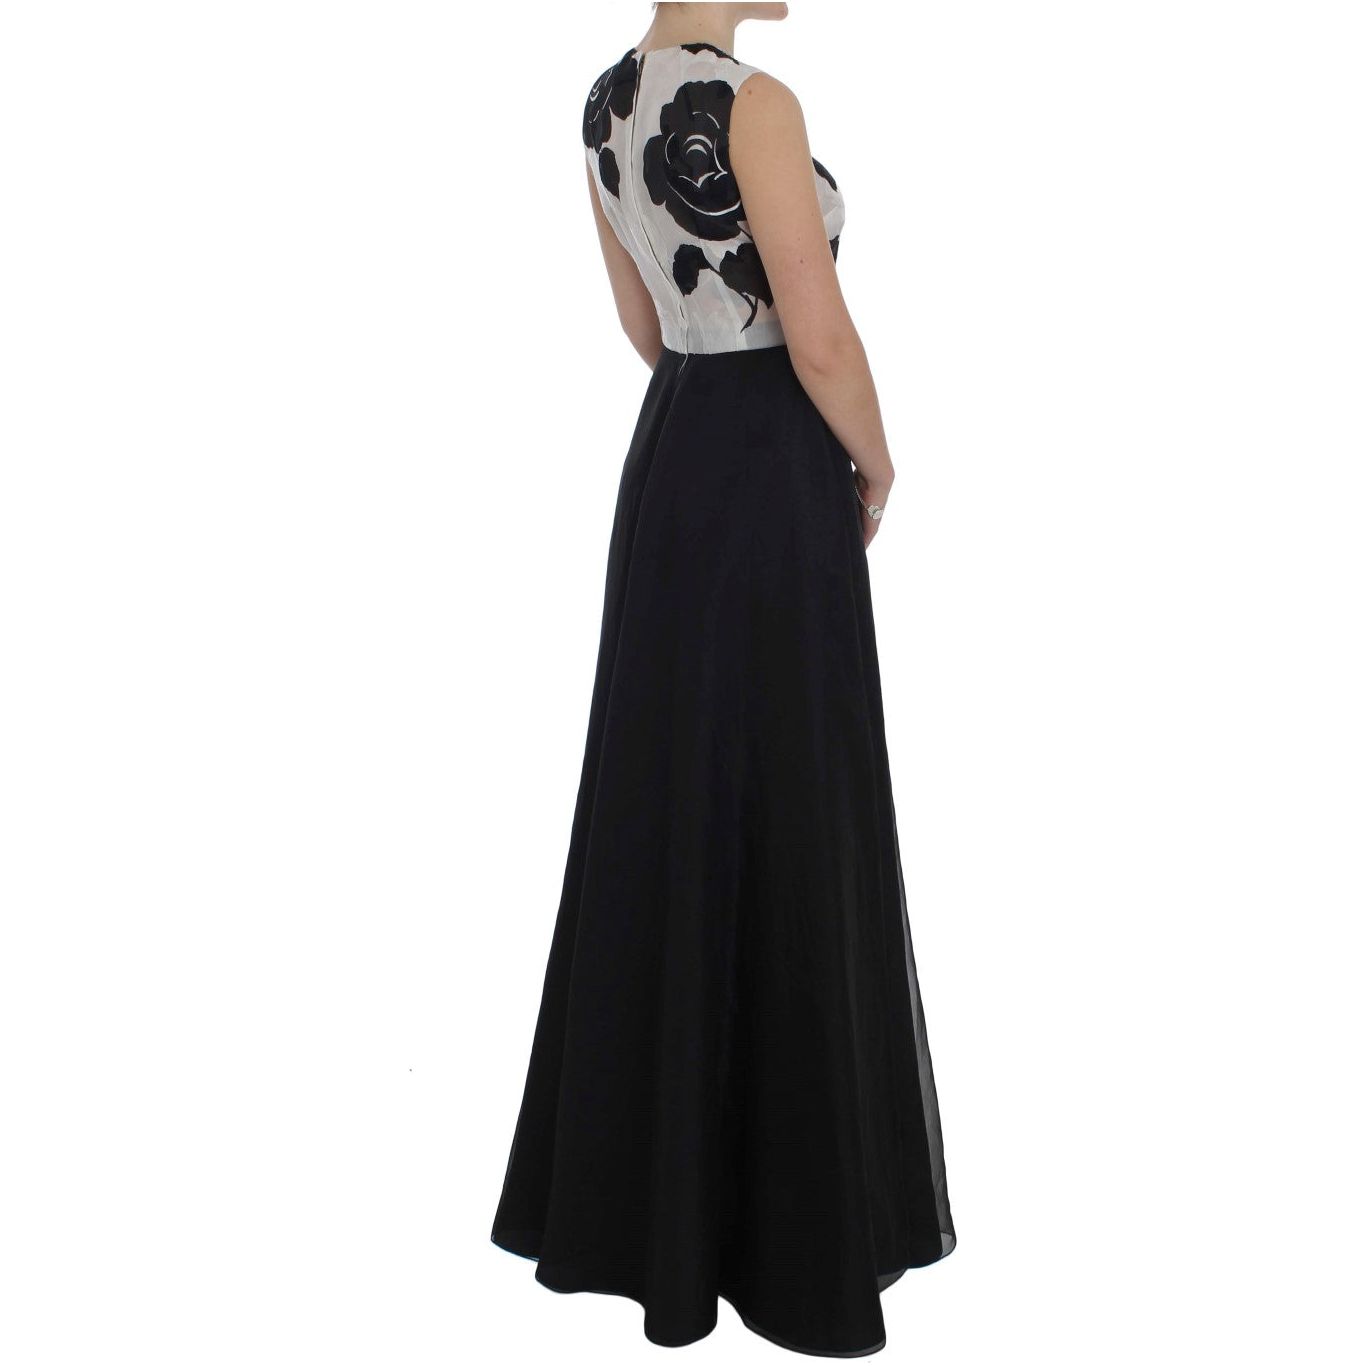 Dolce & Gabbana Elegant Floral Silk Full Length Dress black-white-floral-silk-sheath-gown-dress 72716-black-white-floral-silk-sheath-gown-dress-3.jpg